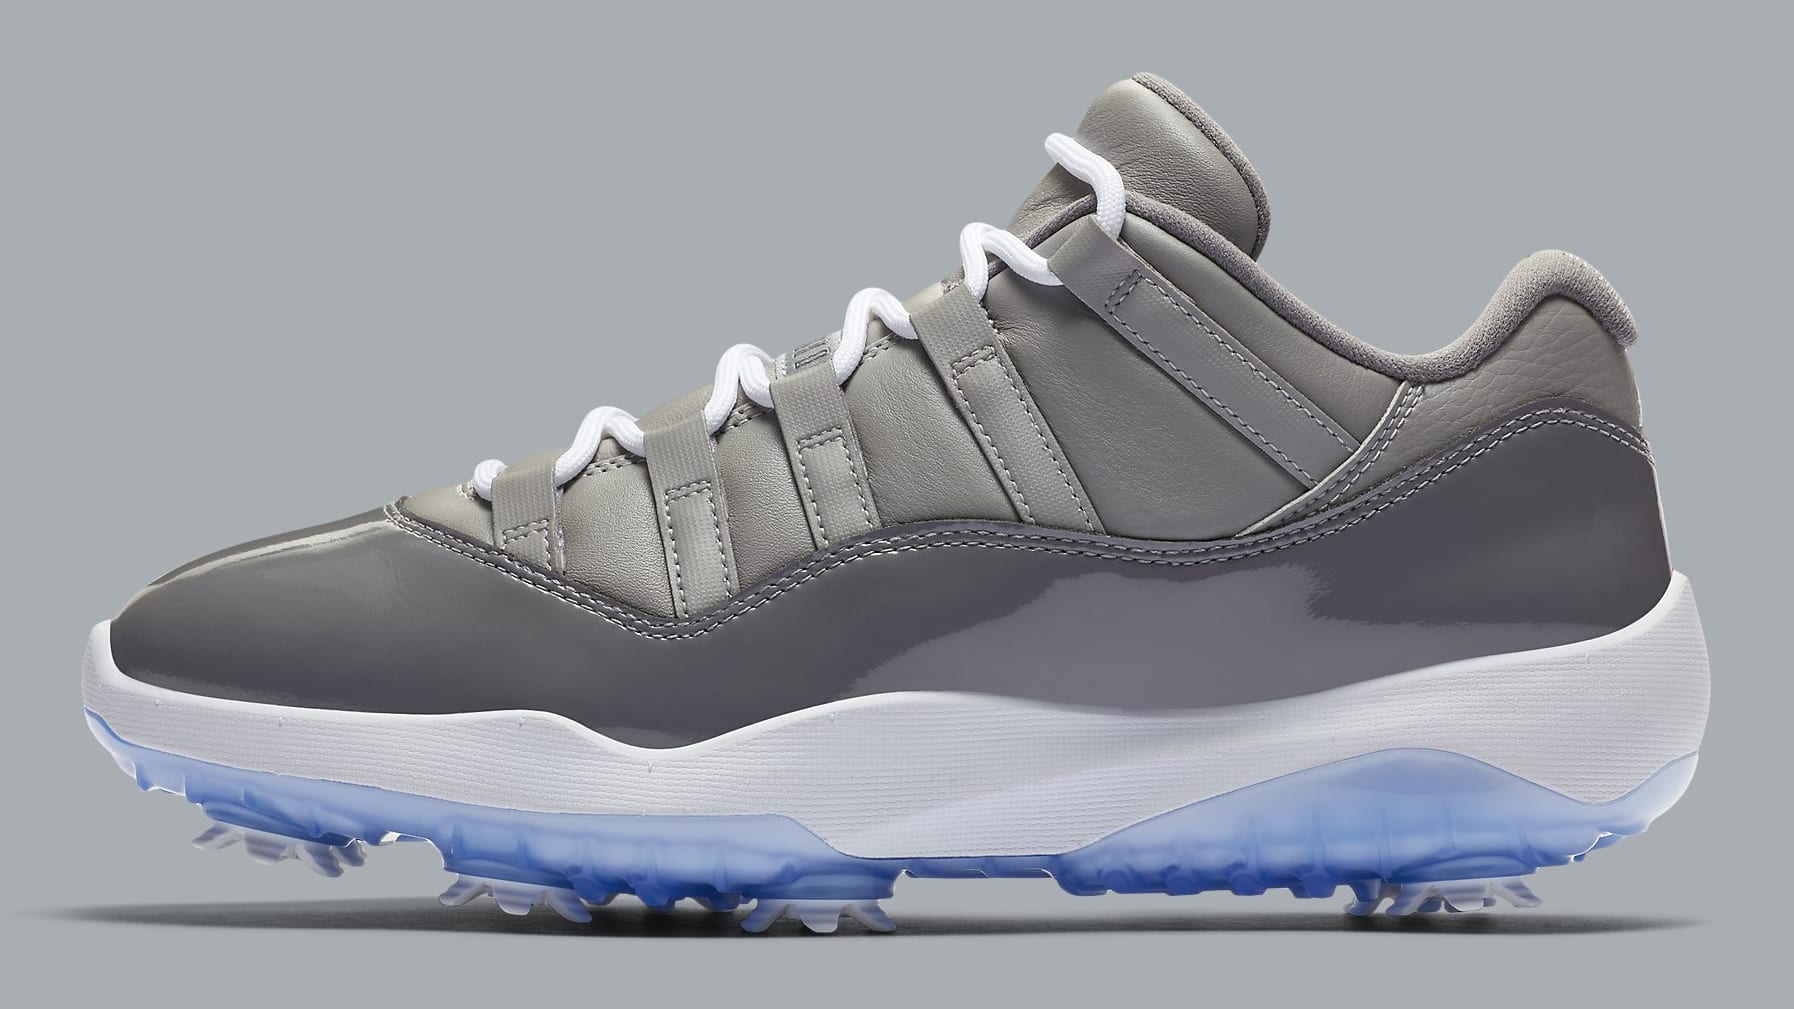 Nike Air Jordan 11 Golf, Limited Edition Release